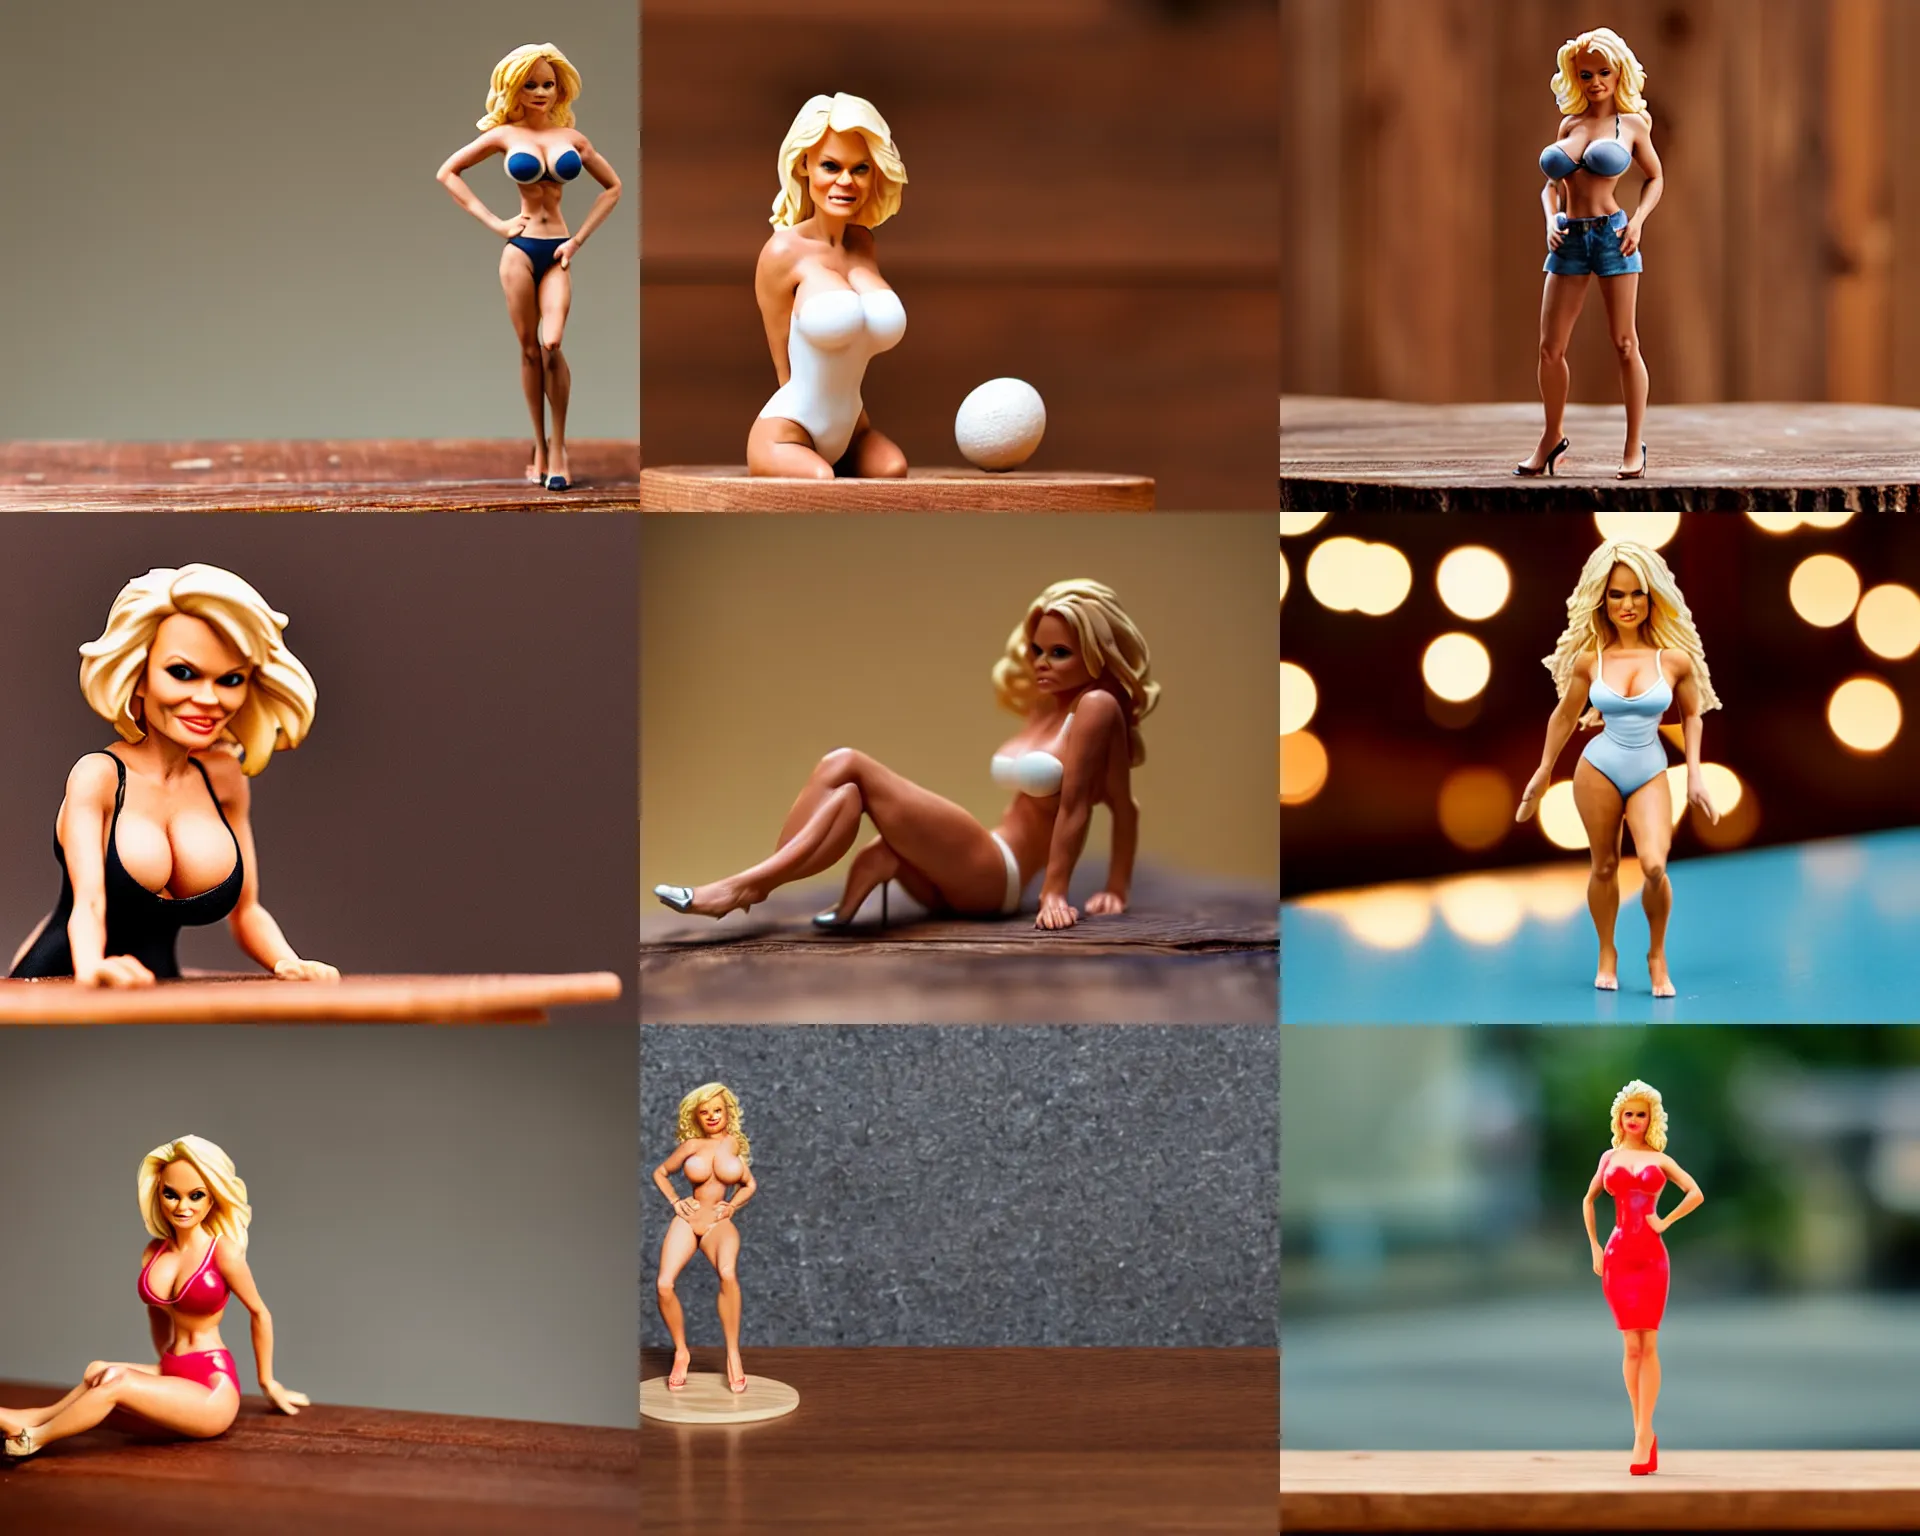 Prompt: Pamela Anderson figurine by Pixar sad bokeh on wooden table.